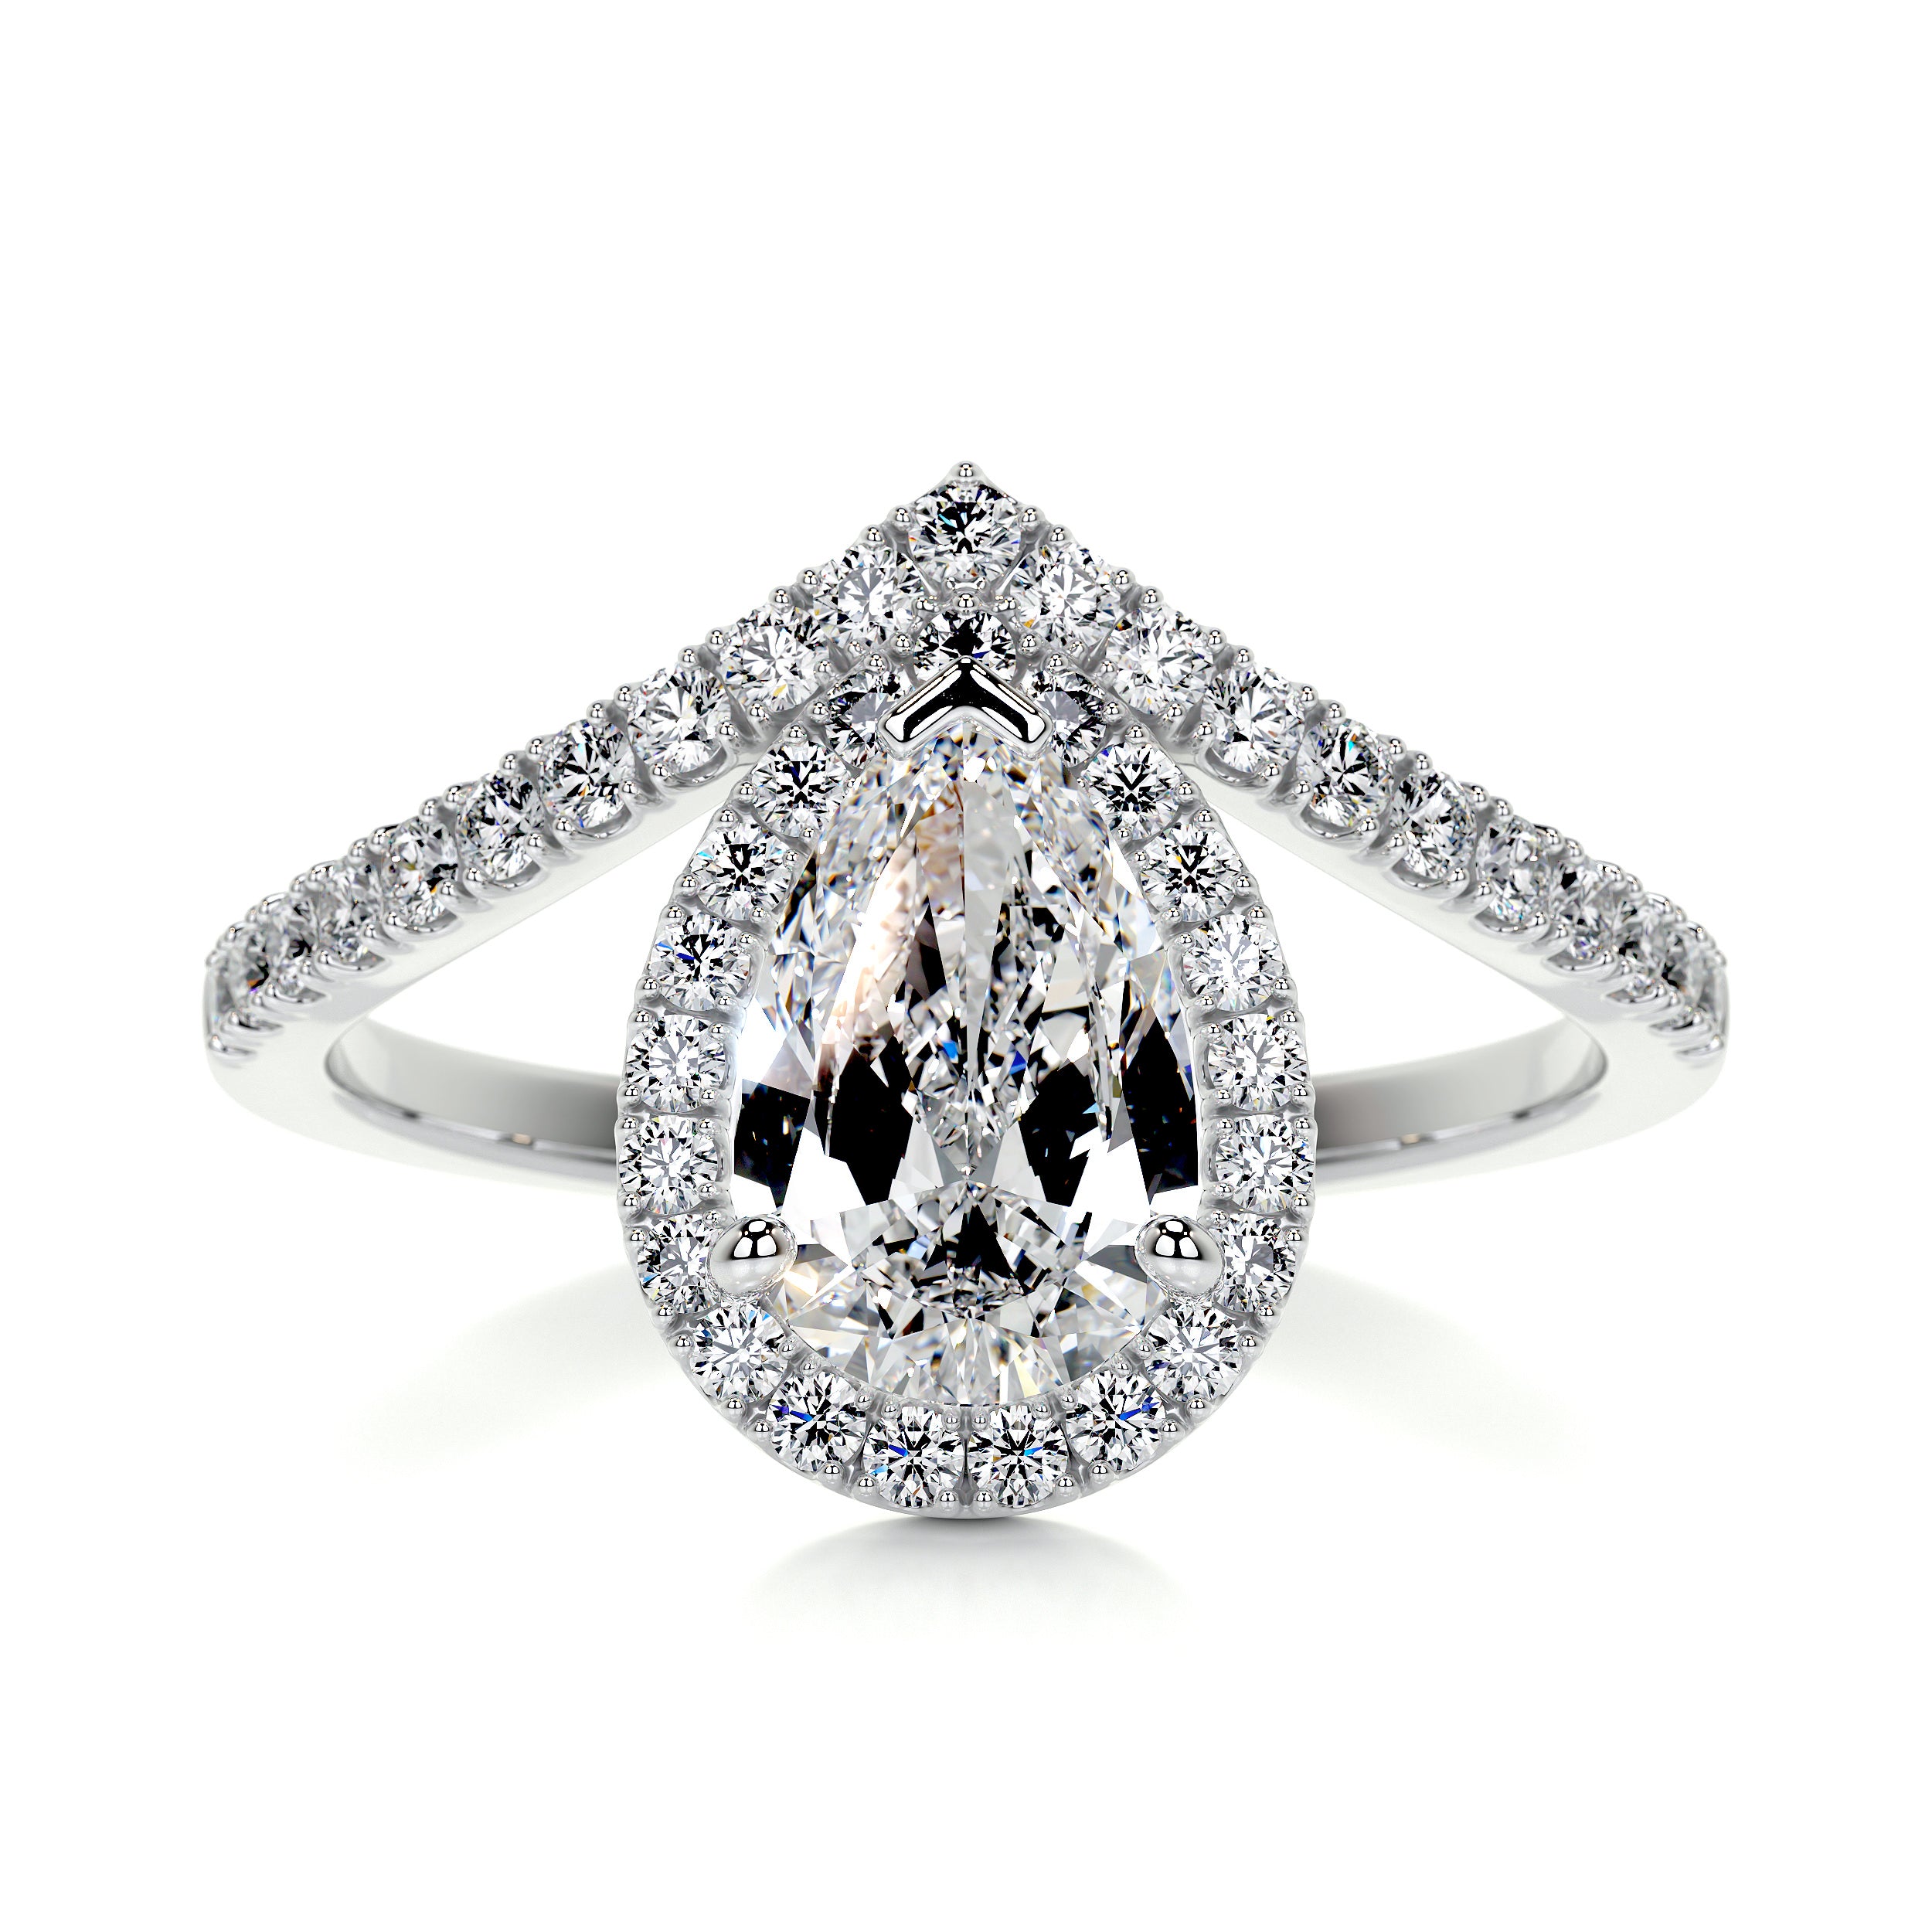 Center Diamond Ring - 14k White Gold - 1.00 carat - Shop